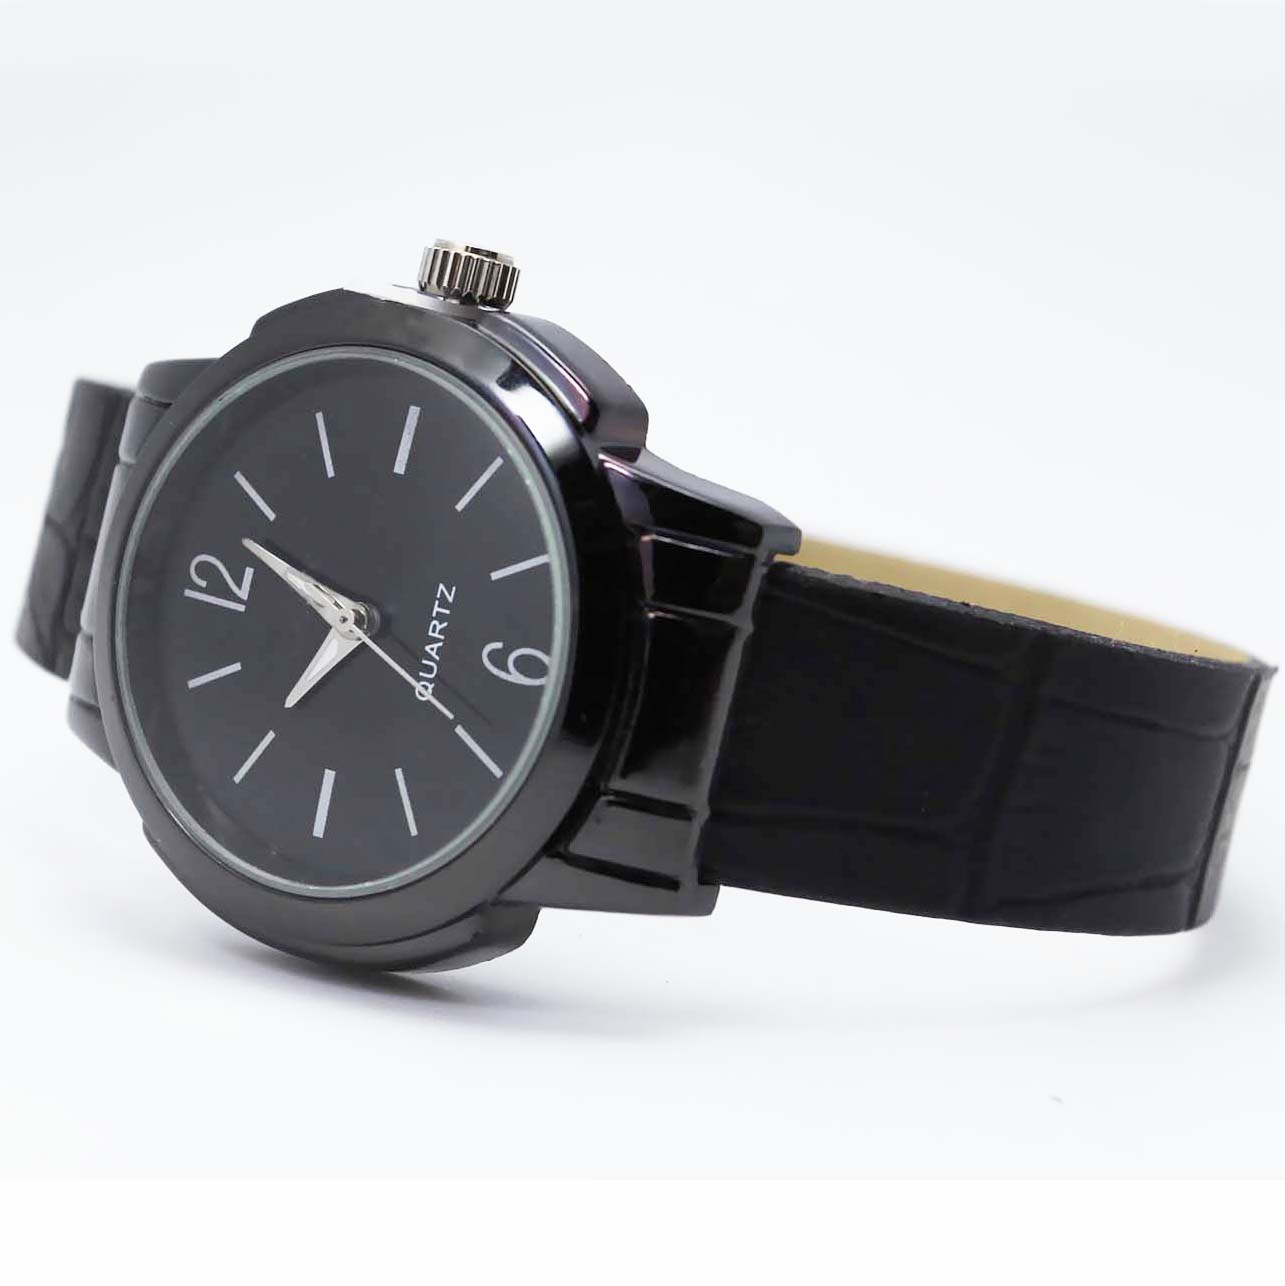 #02144Men's wristwatch quartz analog leather strap watch